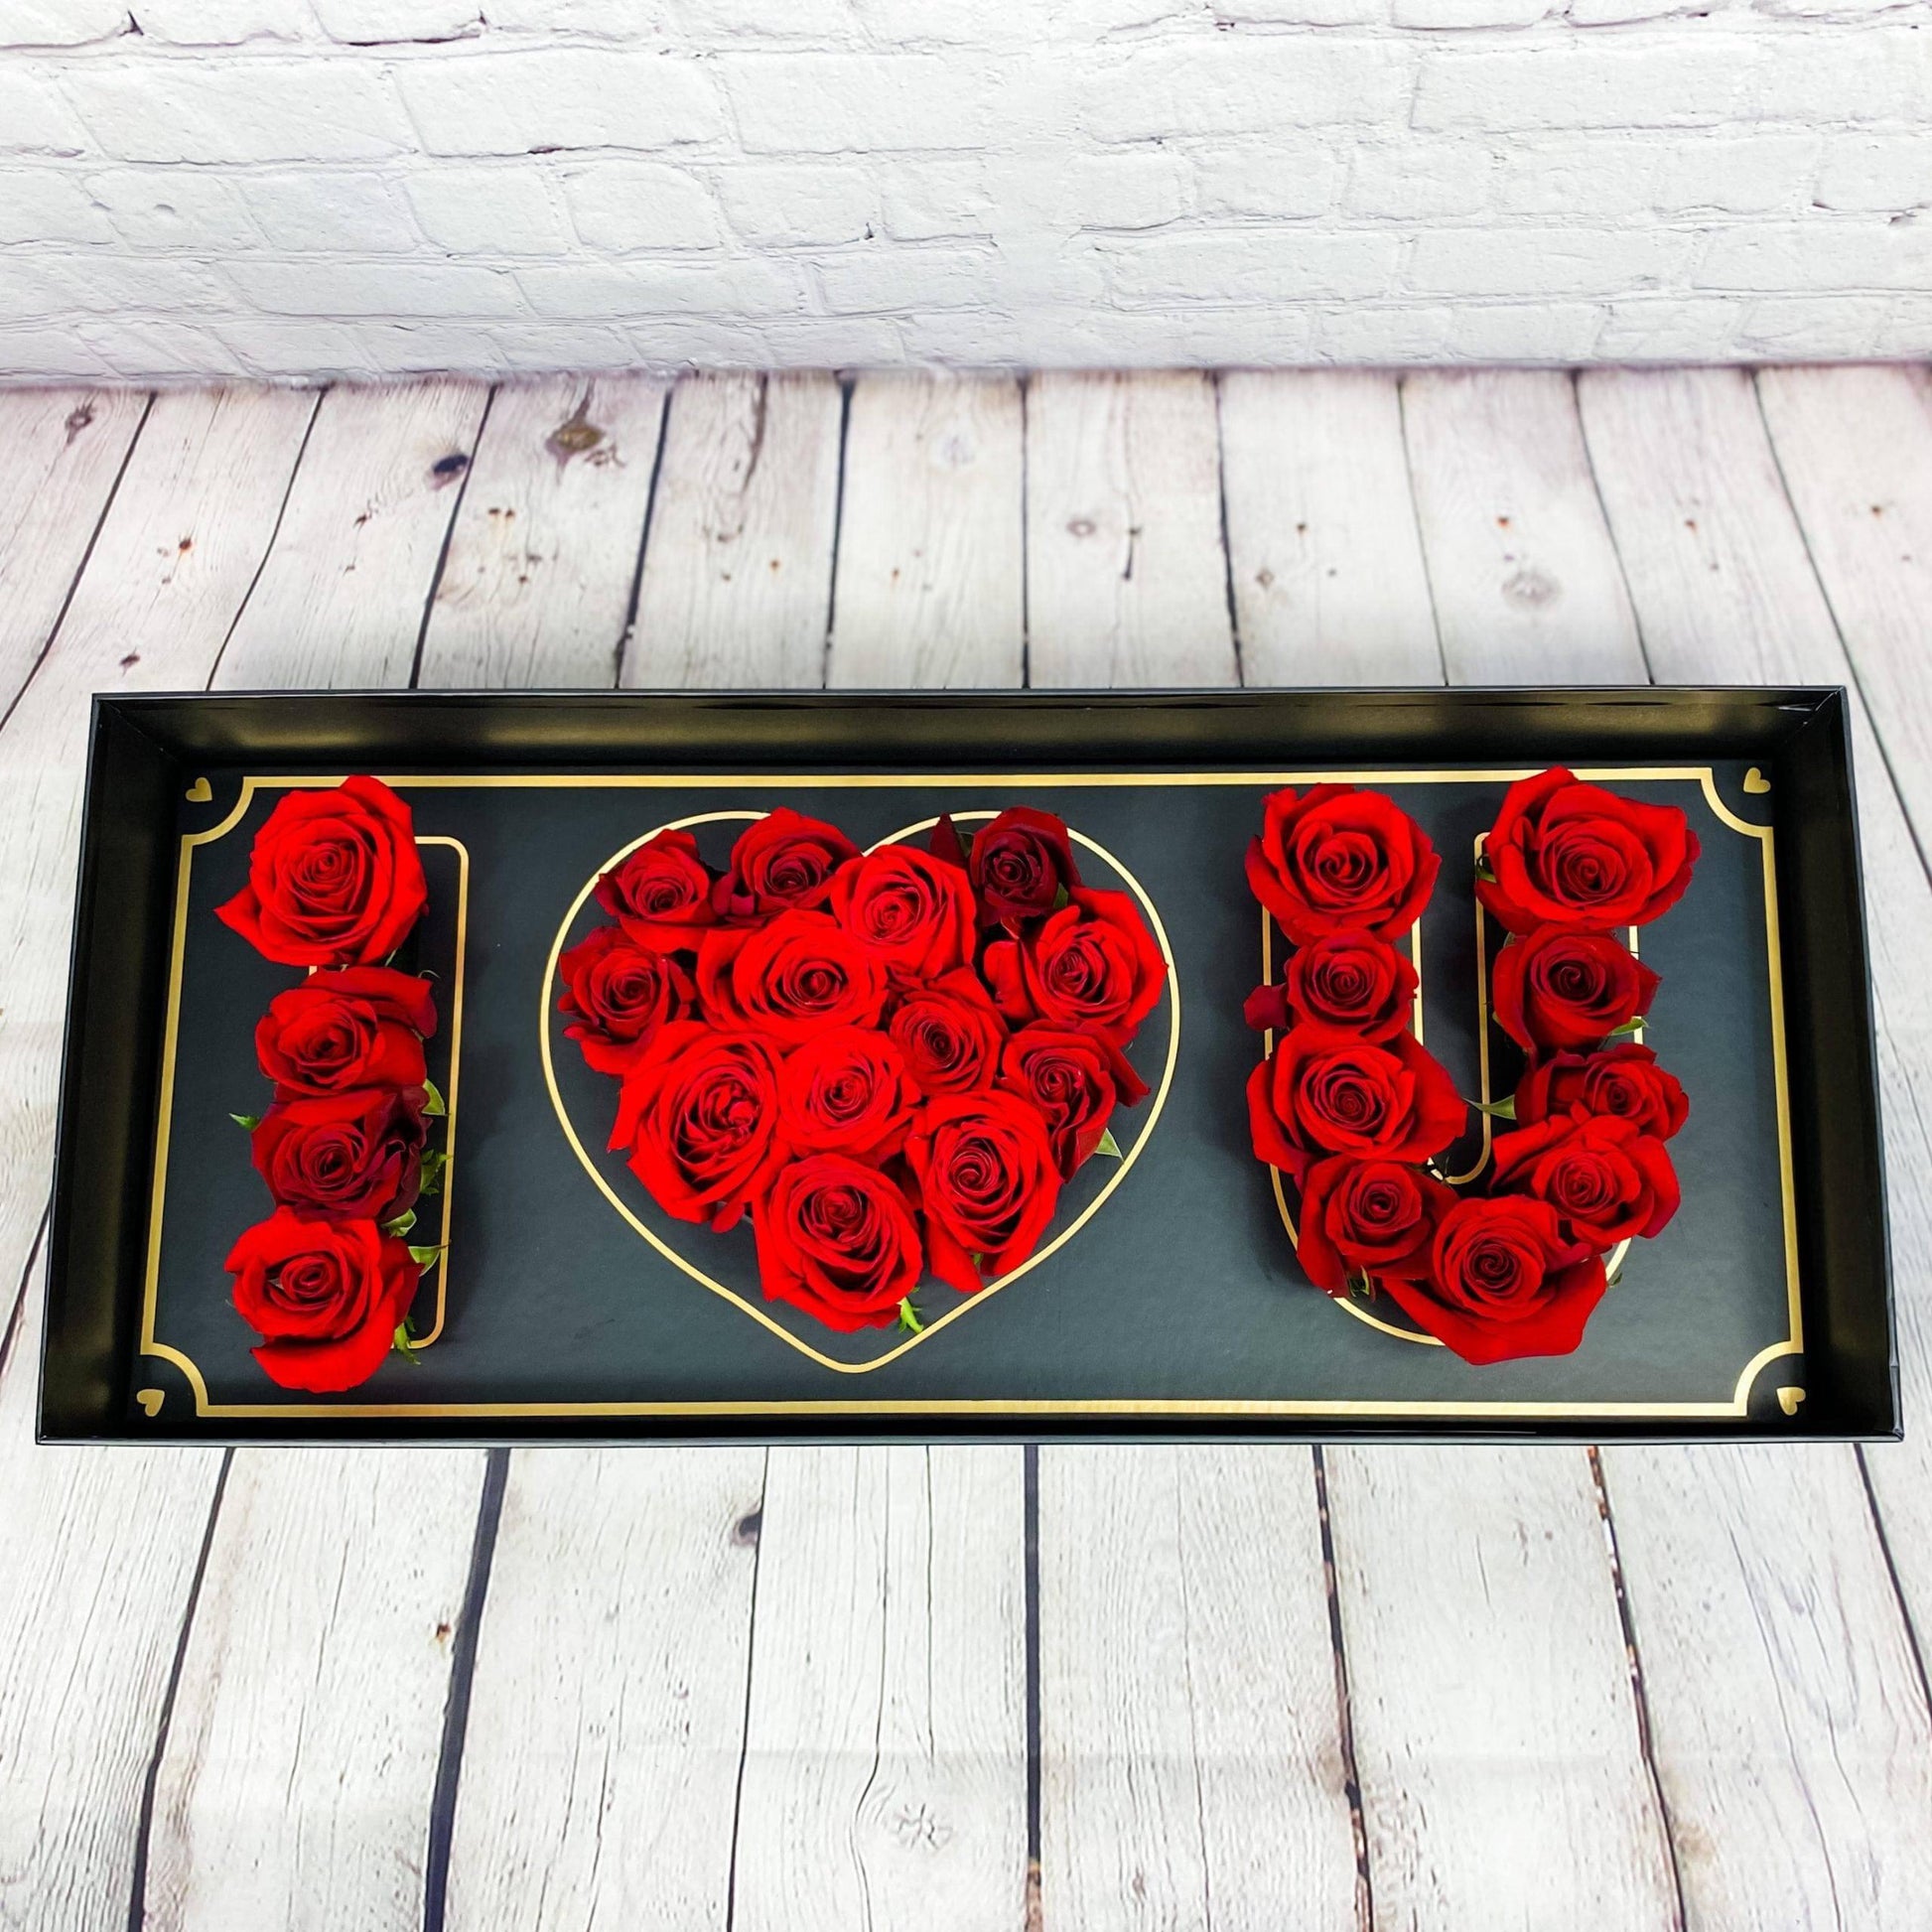 Deep Love Fresh Rose - I ❤️ U Luxury Box - DGM Flowers  | Fort Lauderdale Florist